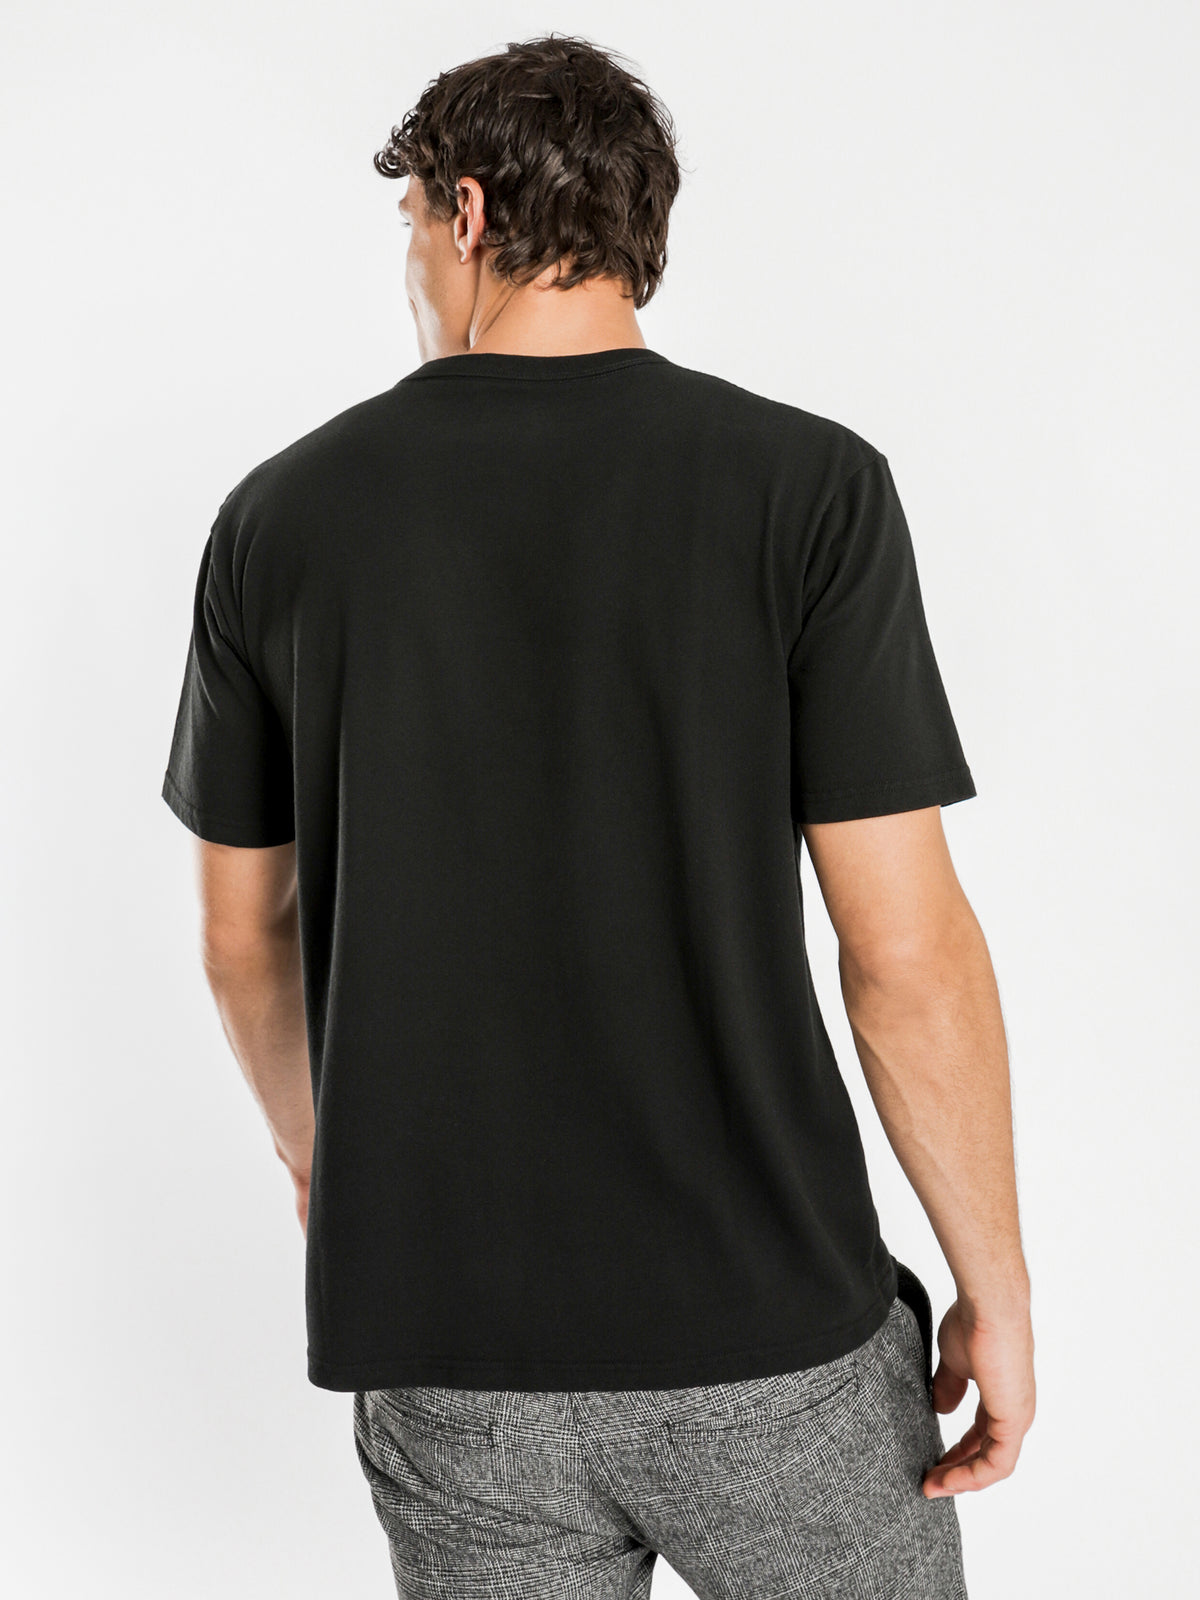 Heavyweight Short Sleeve Crew T-Shirt in Black